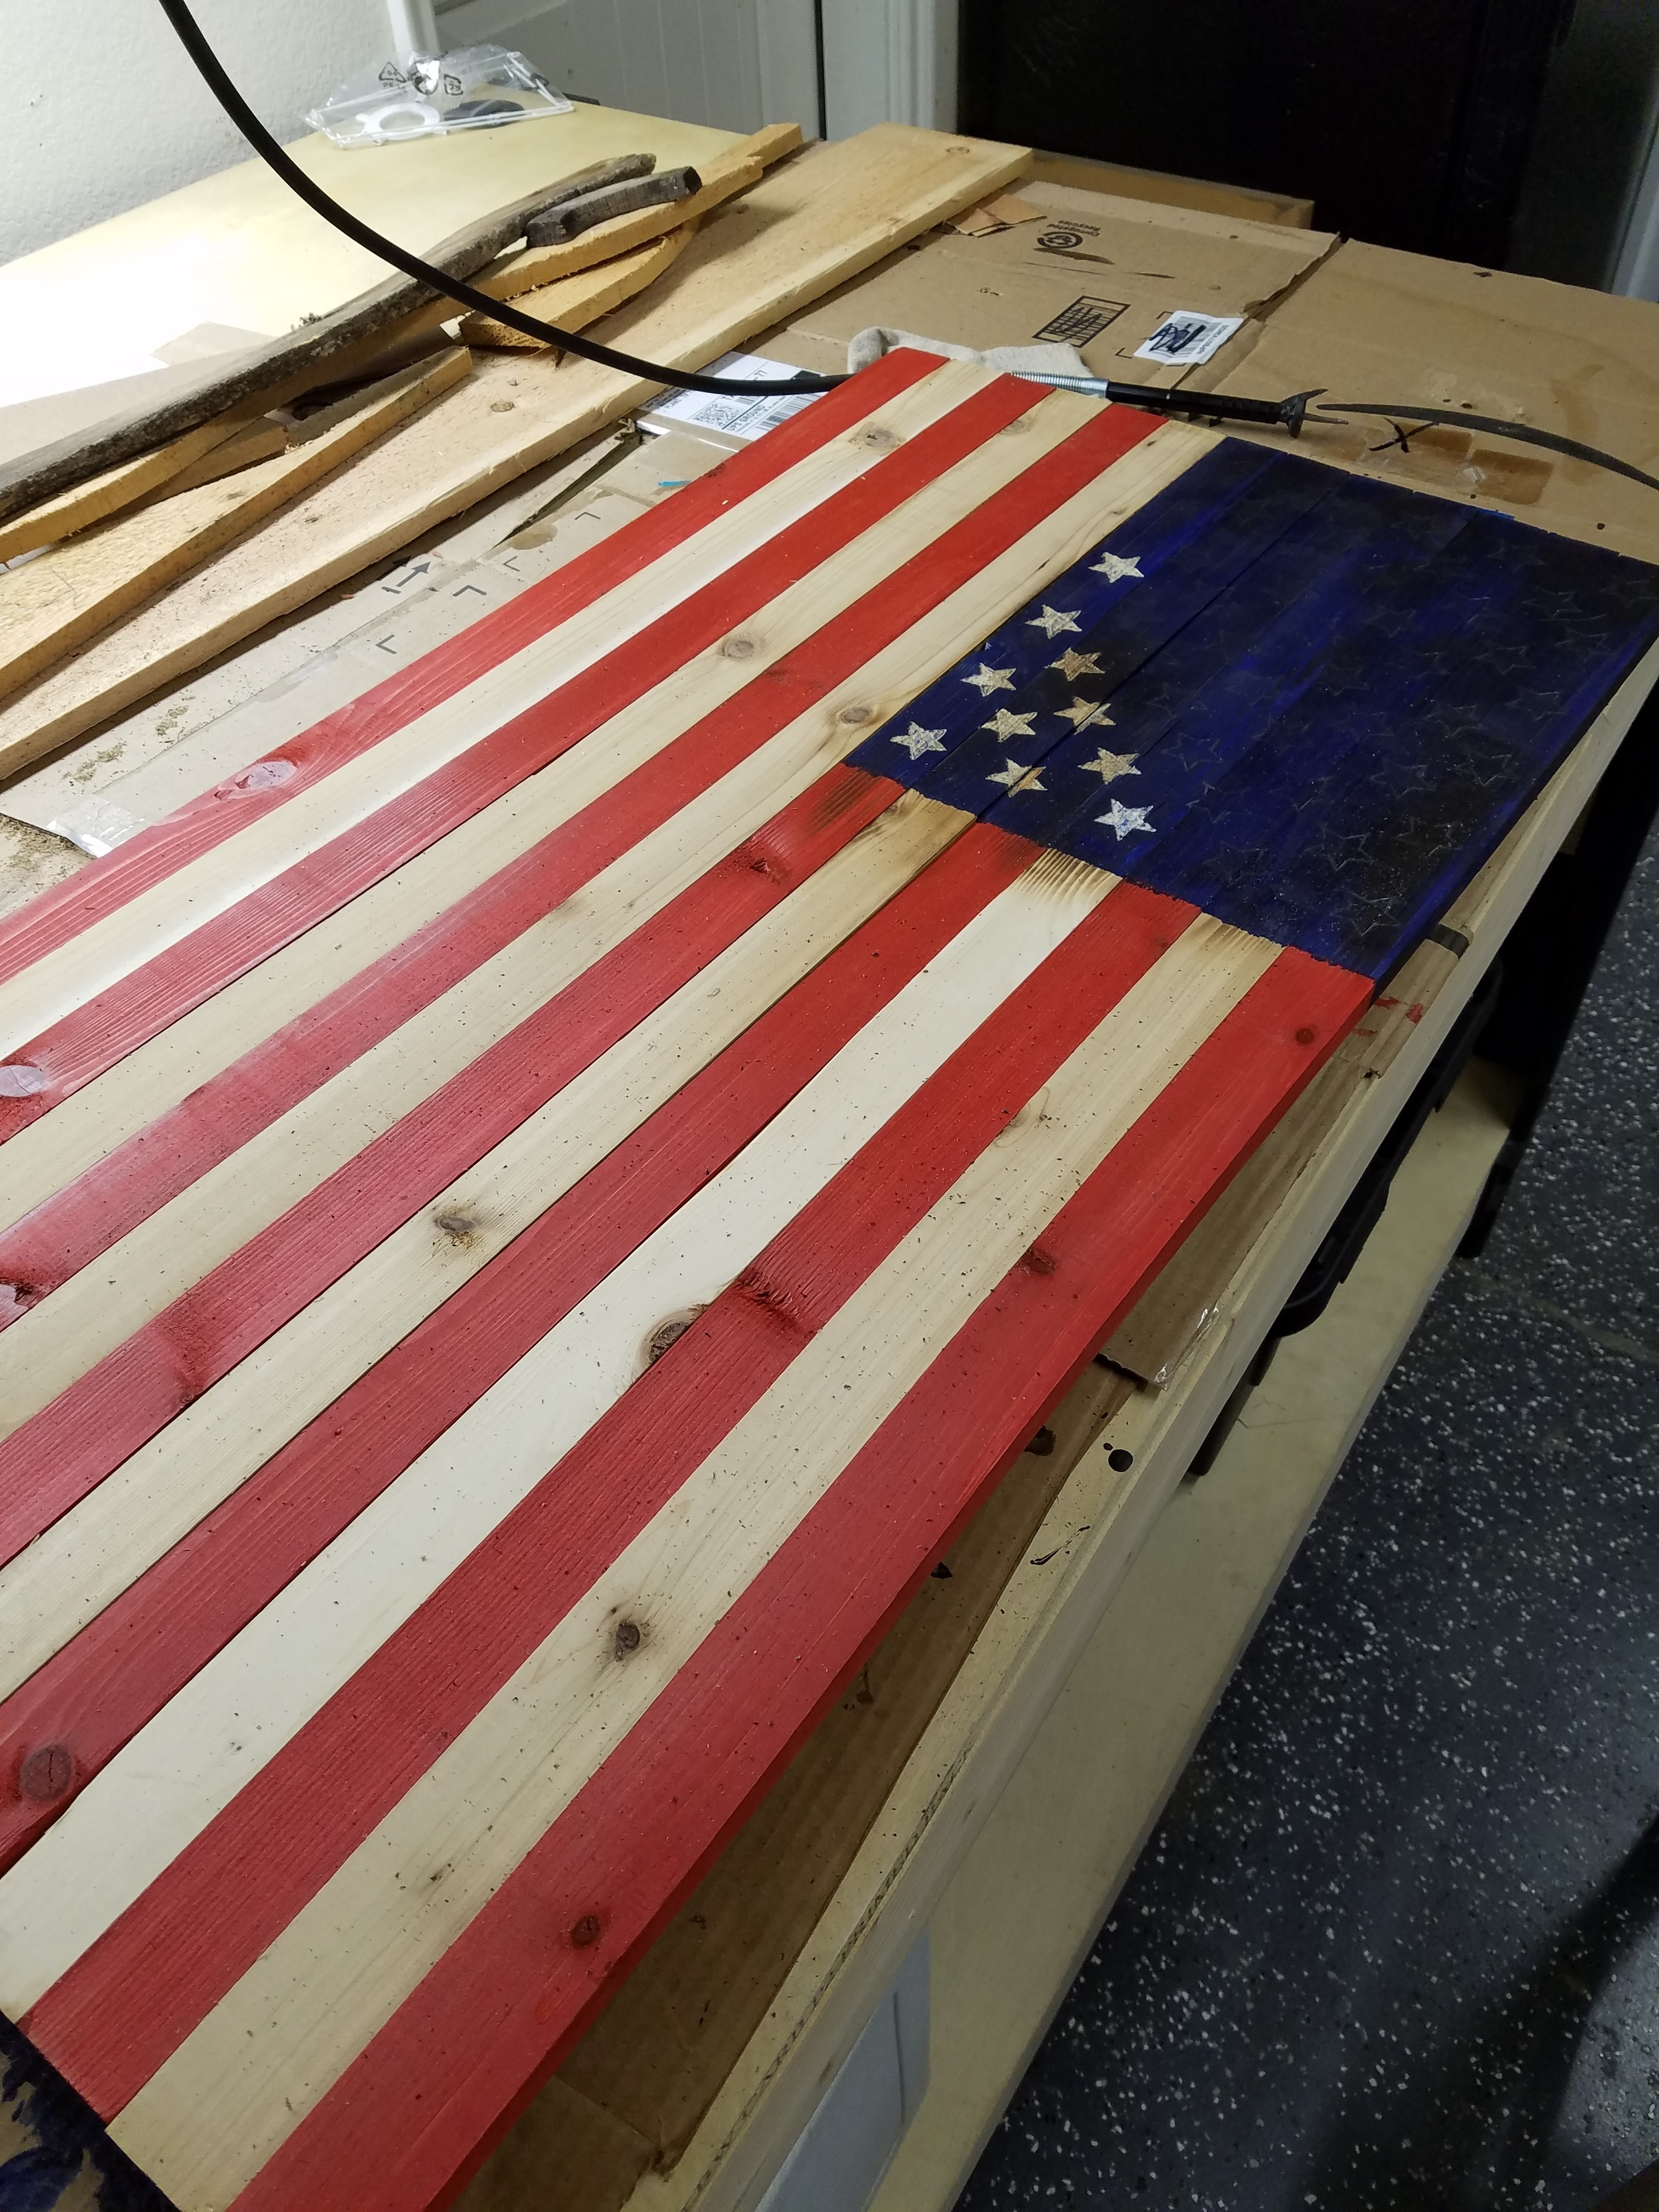 American Flag Stars Svg, Stars of 50 States Svg, Vector Cut File